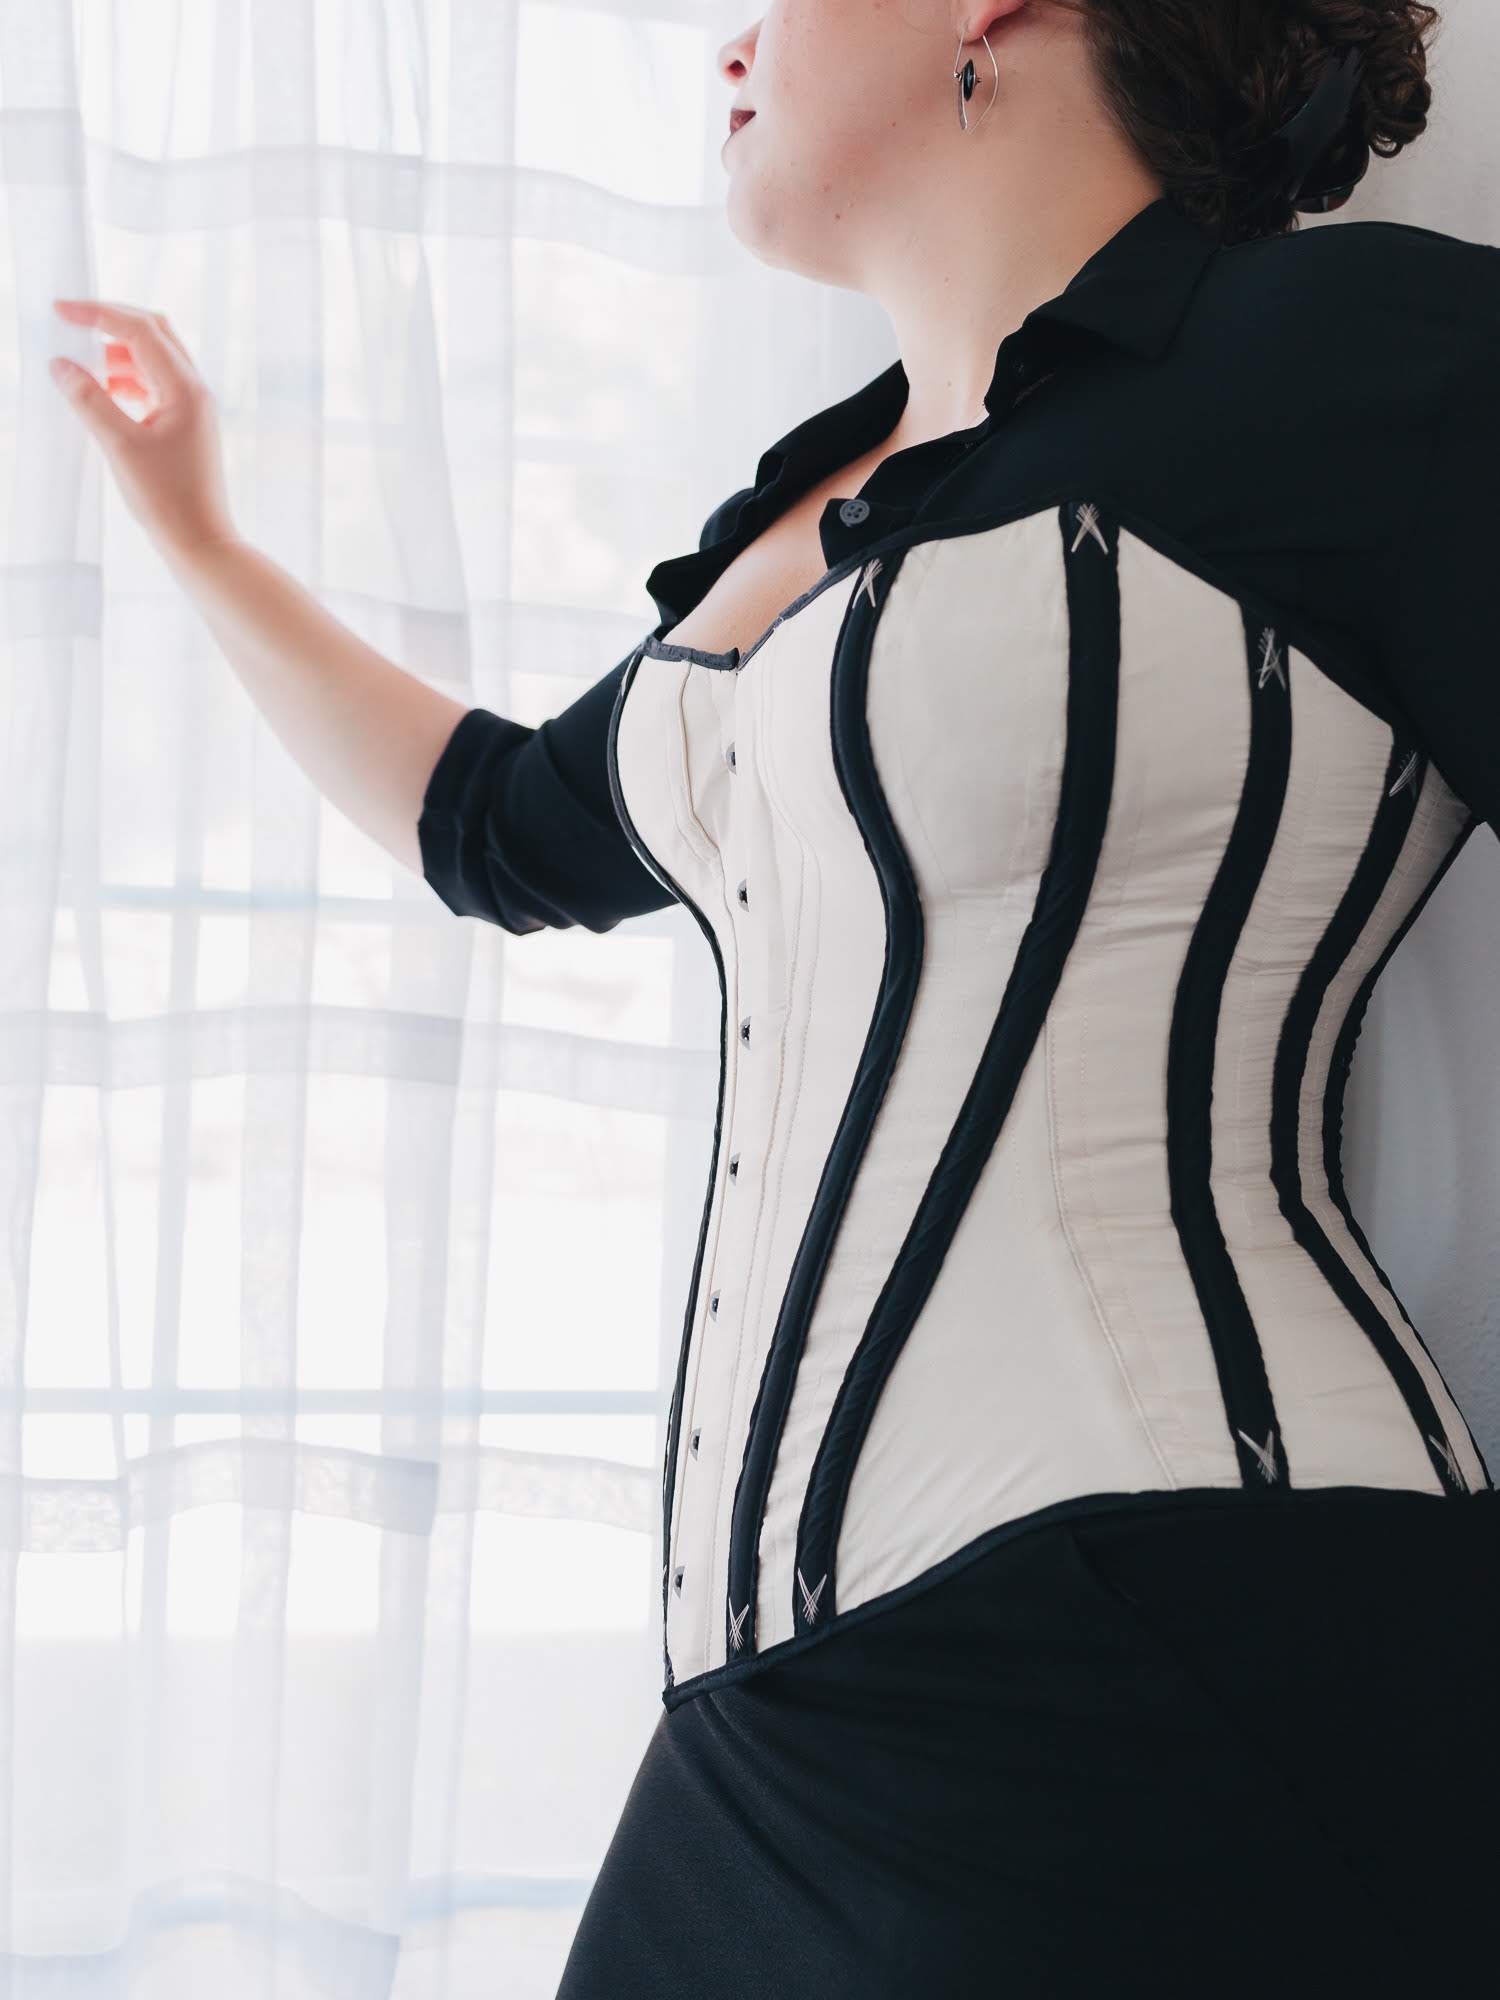 black-and-white-bespoke-corset.jpg